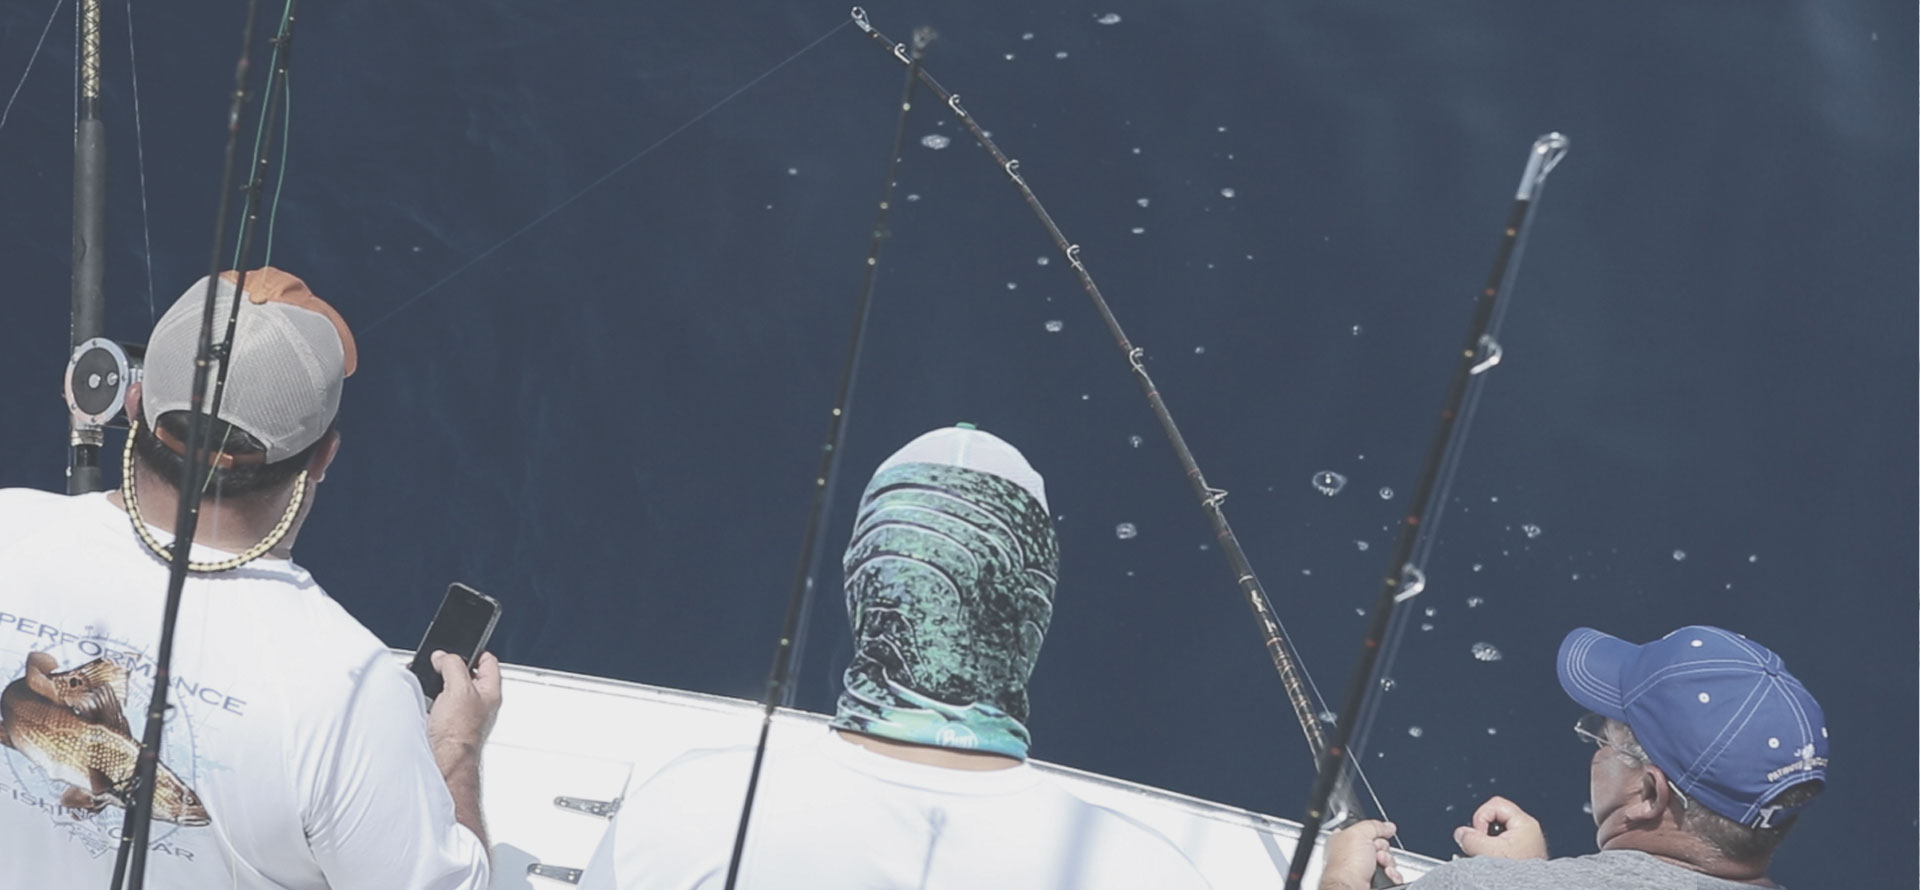 j-hook-fishing-charters-st-augustine-florida-corporate-fishing-trip-team-building